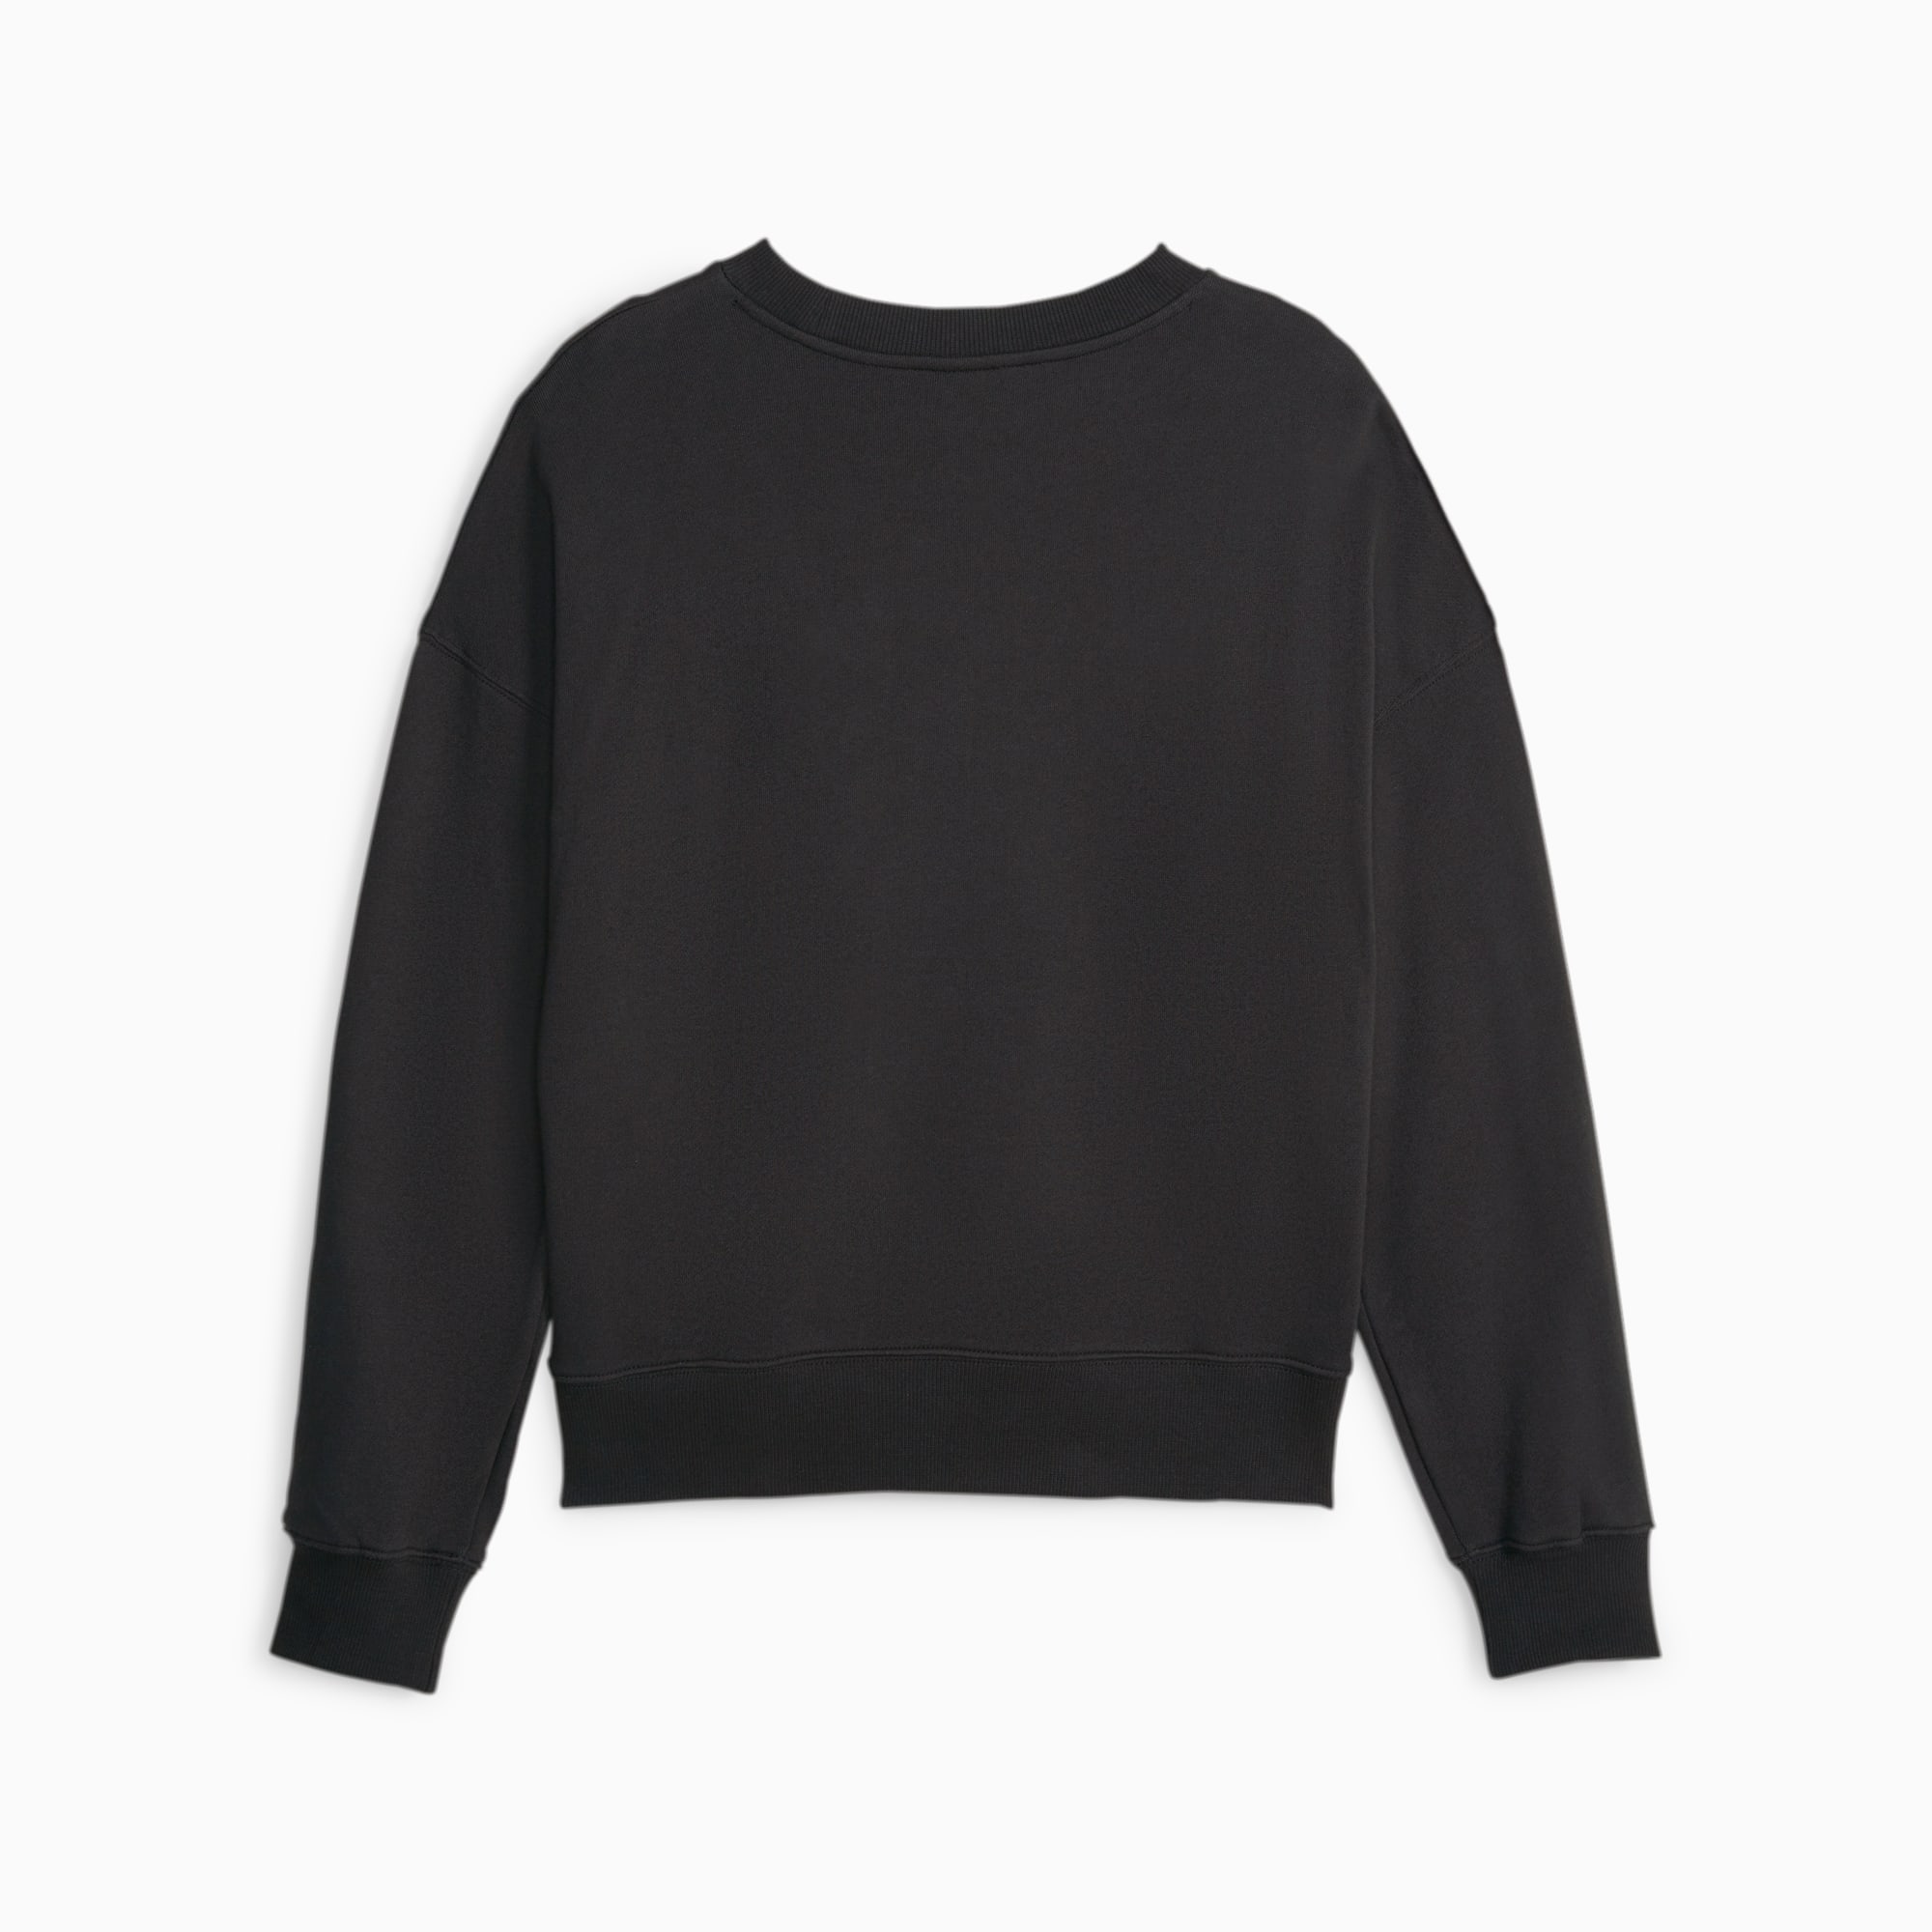  Sweatshirts for Women Women's Sweatshirts Solid Frill Trim  Sweatshirt Dress Sweatshirts (Color : Black, Size : Medium) : Clothing,  Shoes & Jewelry